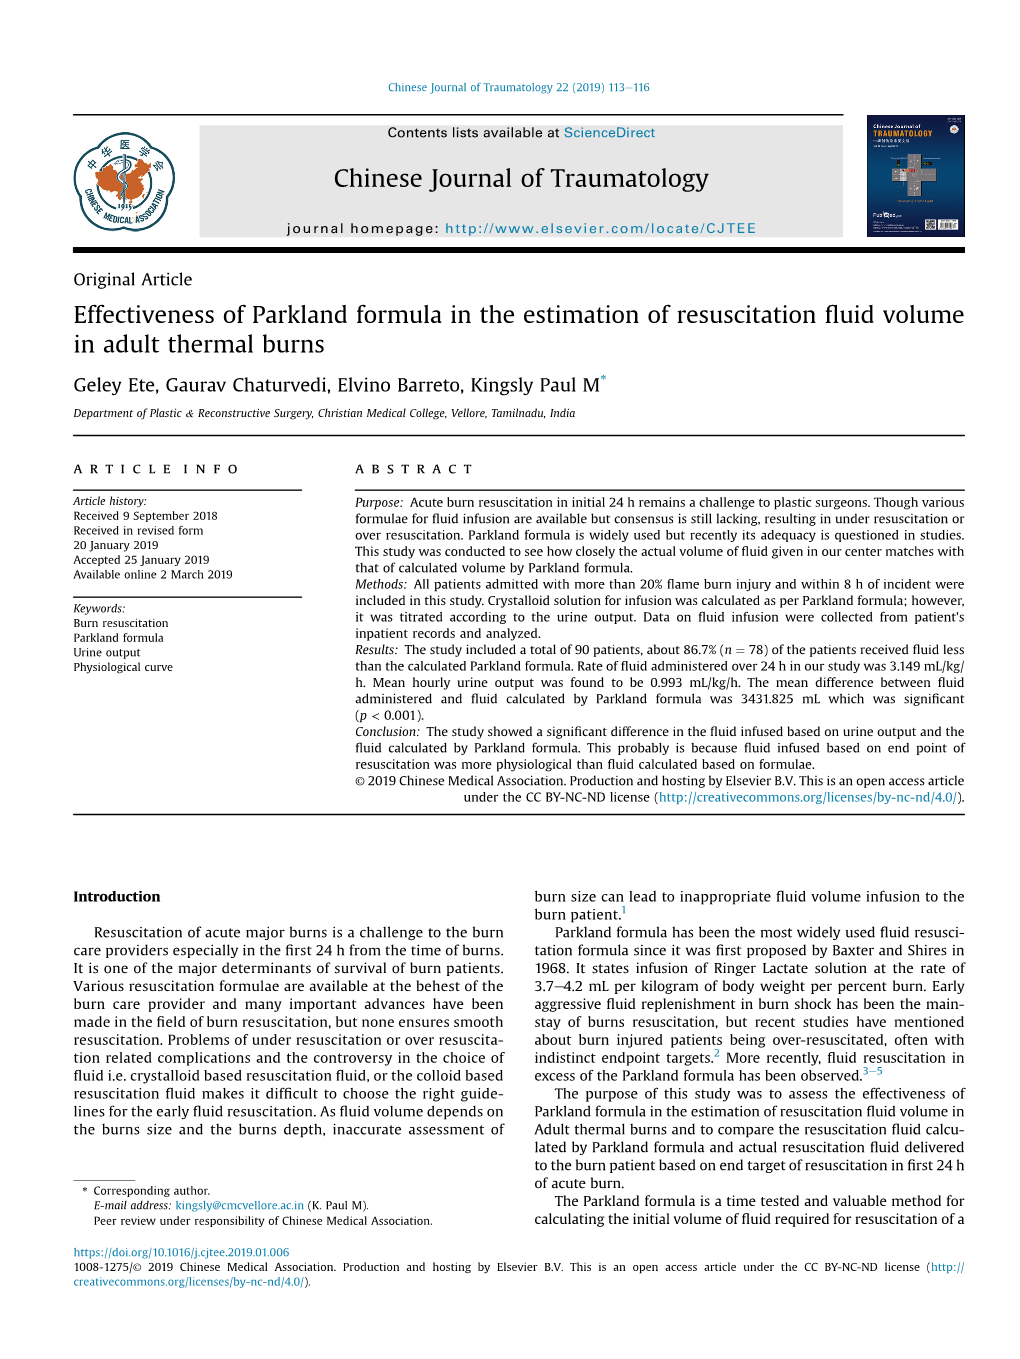 Effectiveness of Parkland Formula in the Estimation of Resuscitation Fluid Volume in Adult Thermal Burns